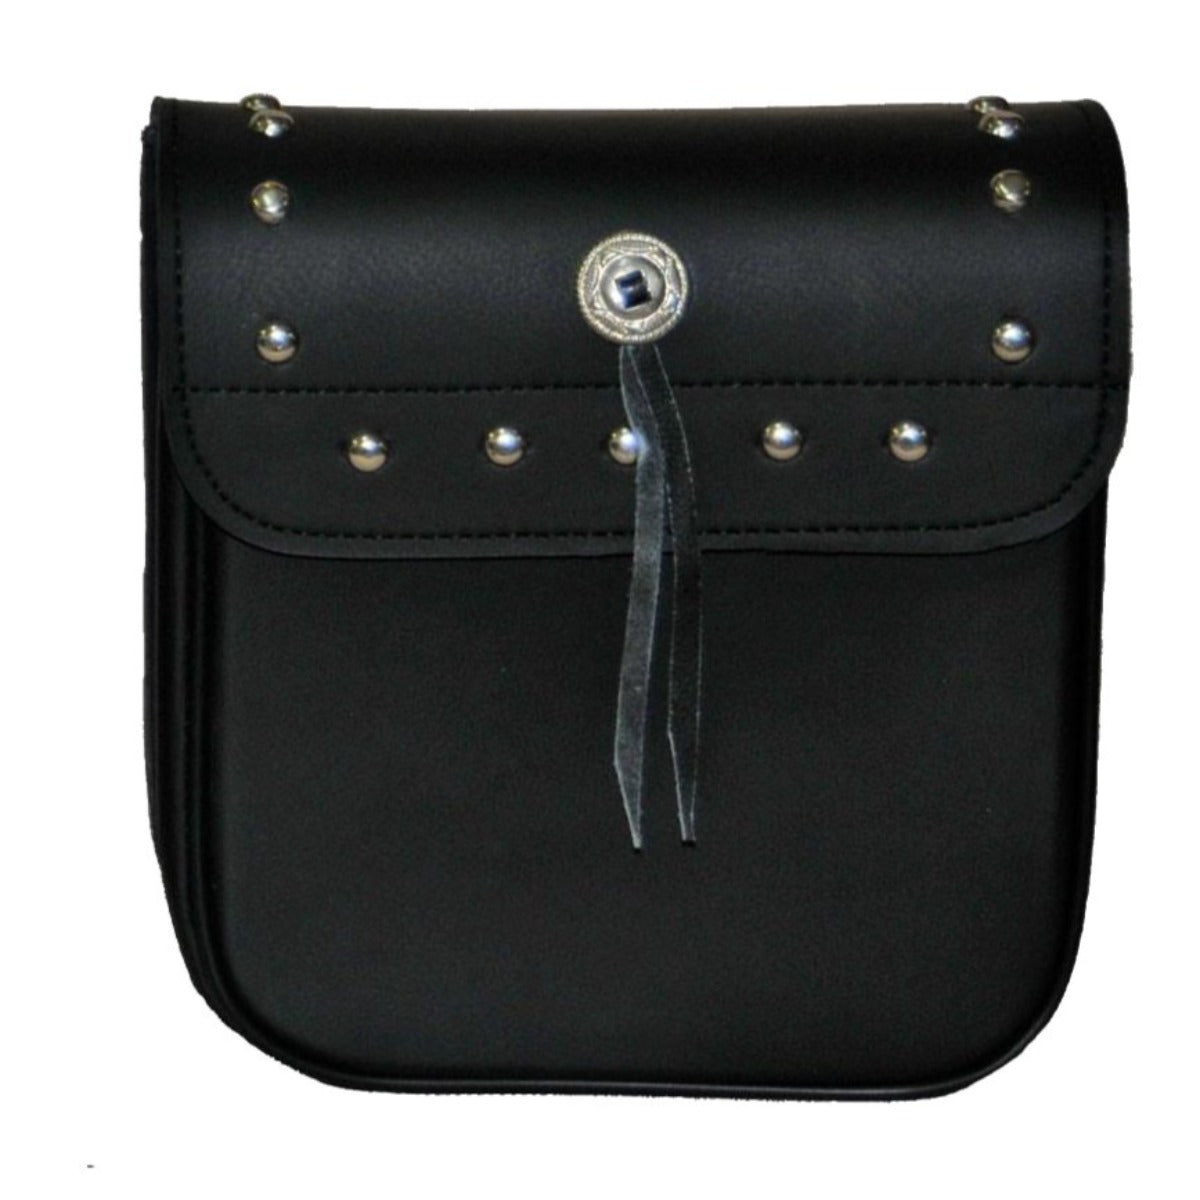 Vance Leather Small Studded Sissy Bar Bag